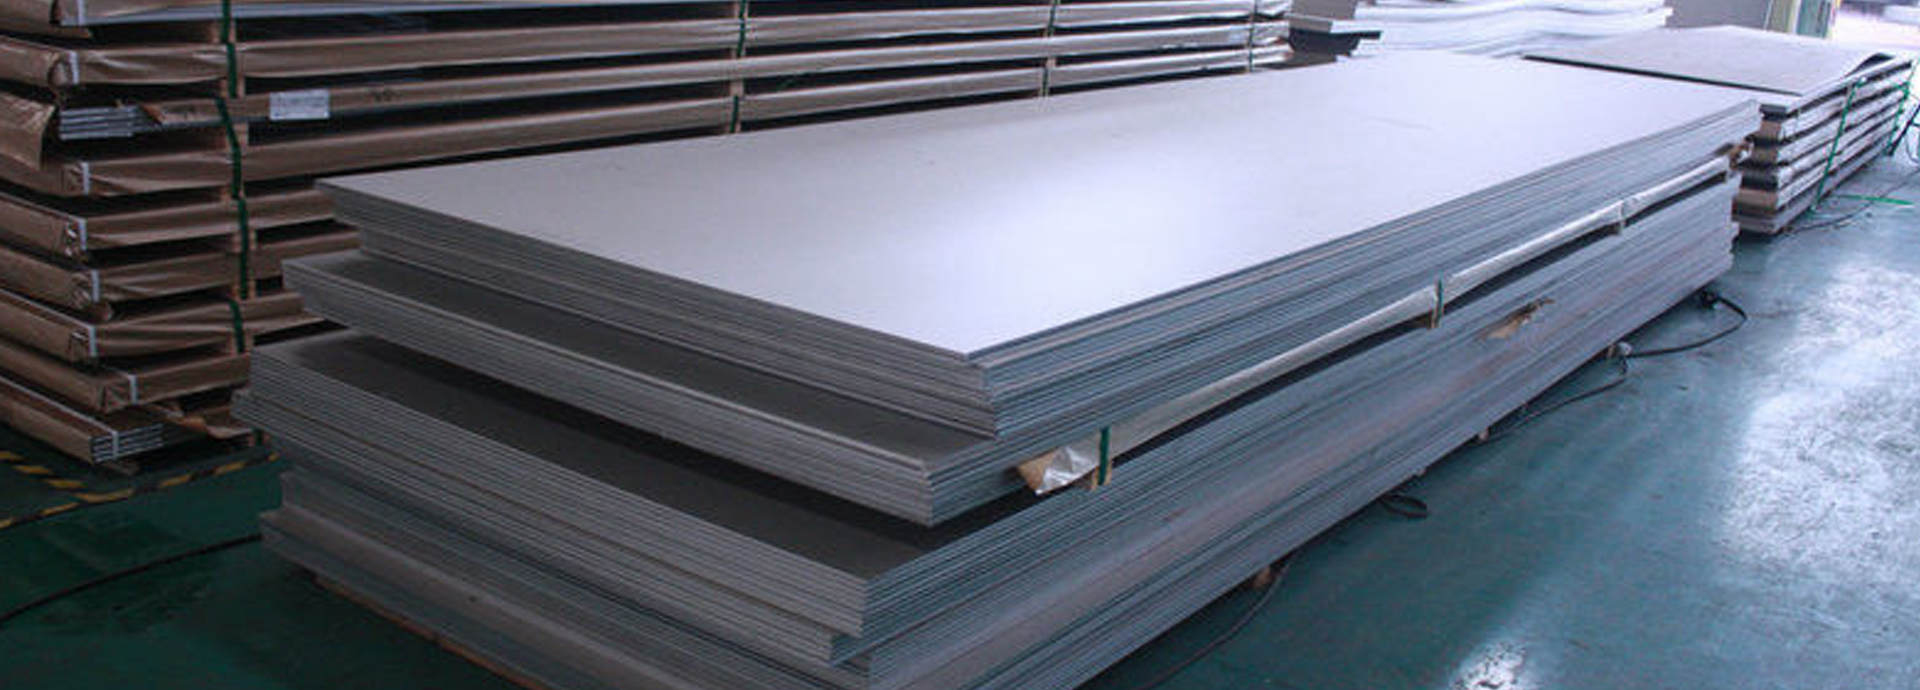 plate-sheets-coils-supplier-exporter